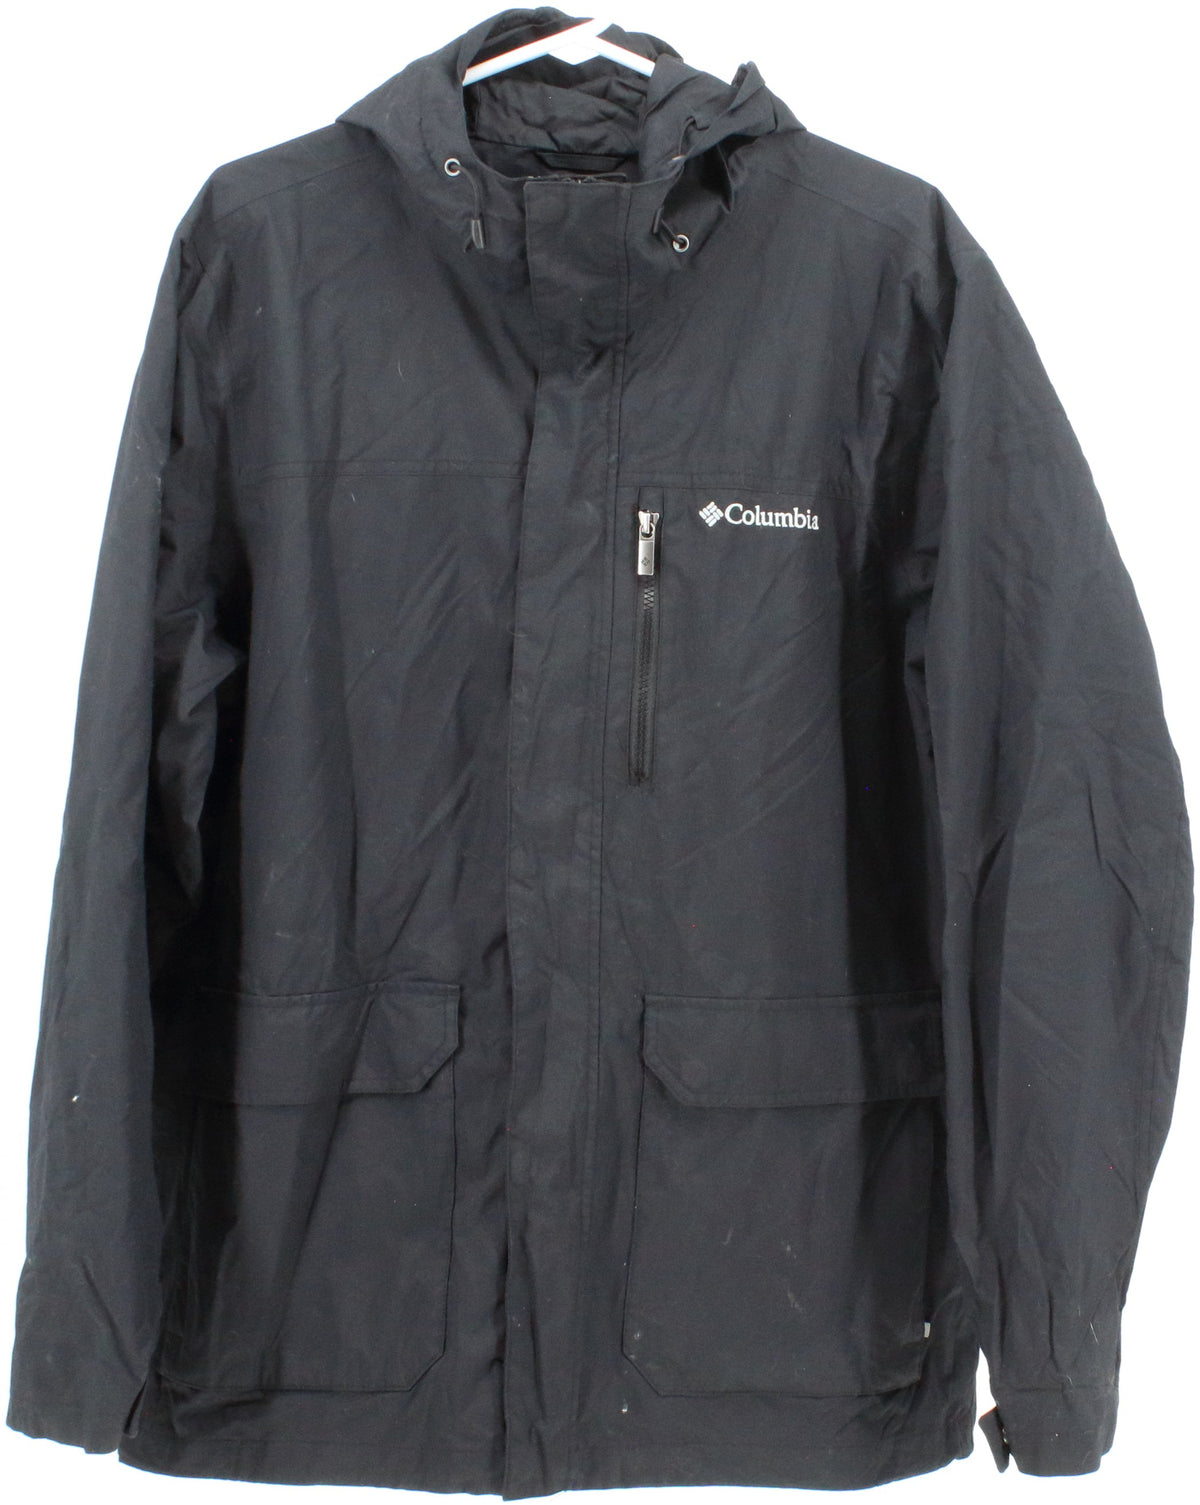 Columbia Men's Omni-Tech Waterproof Breathable Black Jacket